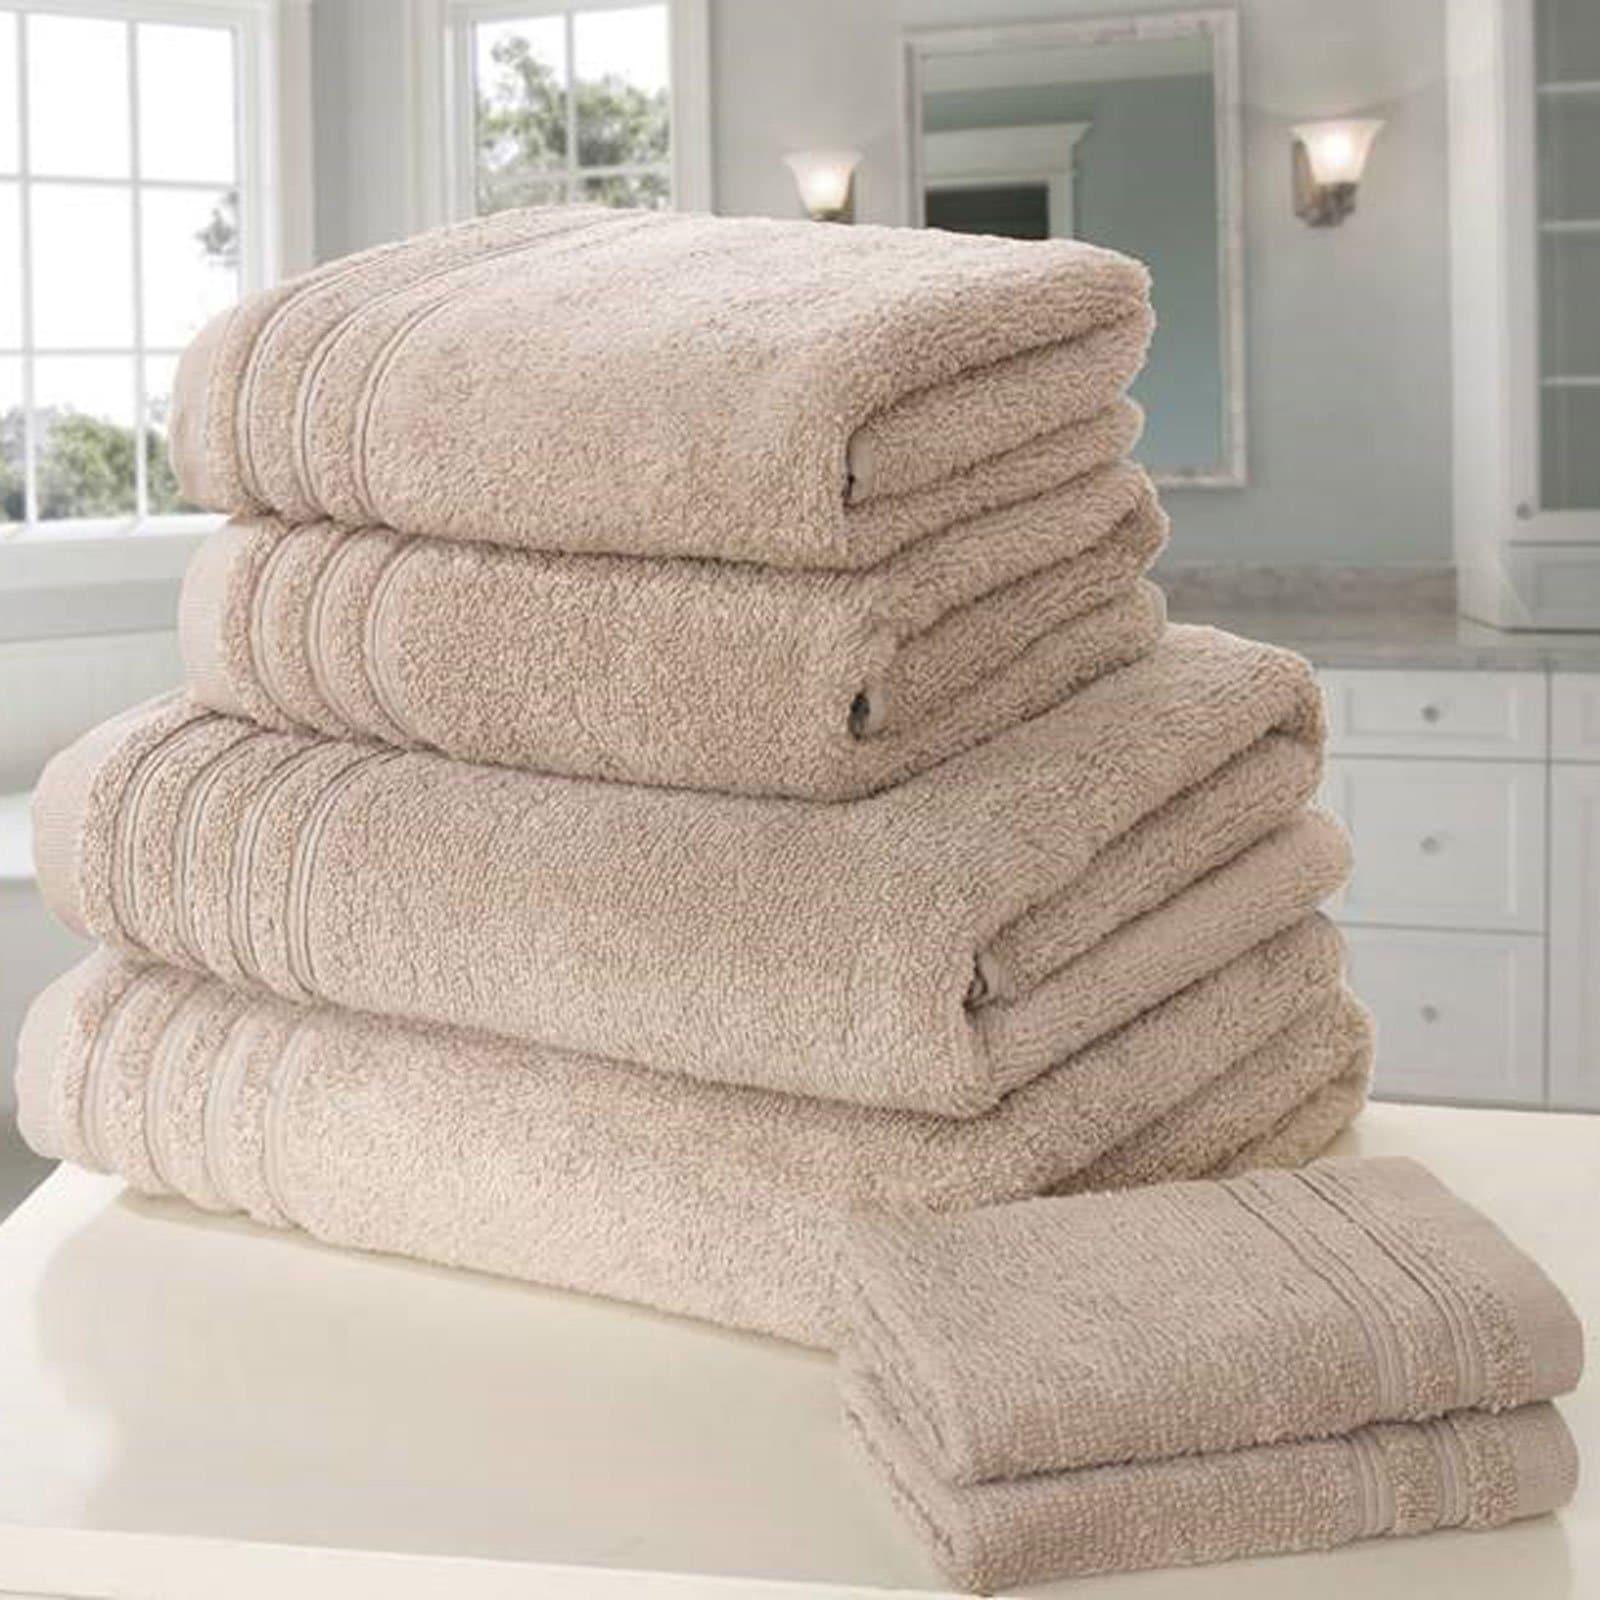 100% Combed Cotton Super Soft Absorbent 6 Piece Bathroom Towel Bale Set